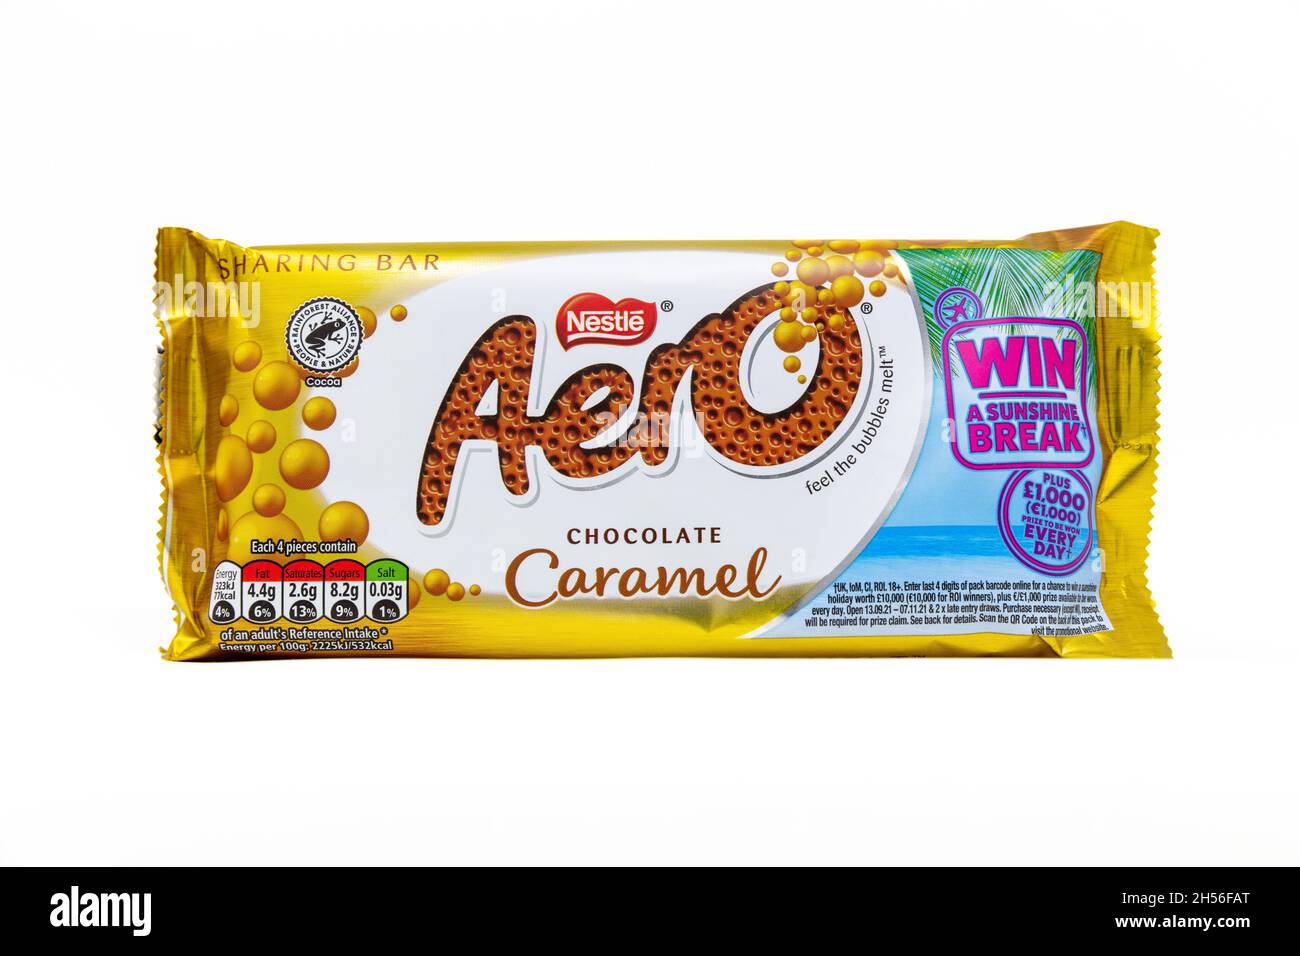 Aero Caramel Chocolate Sharing Bar Stock Photo